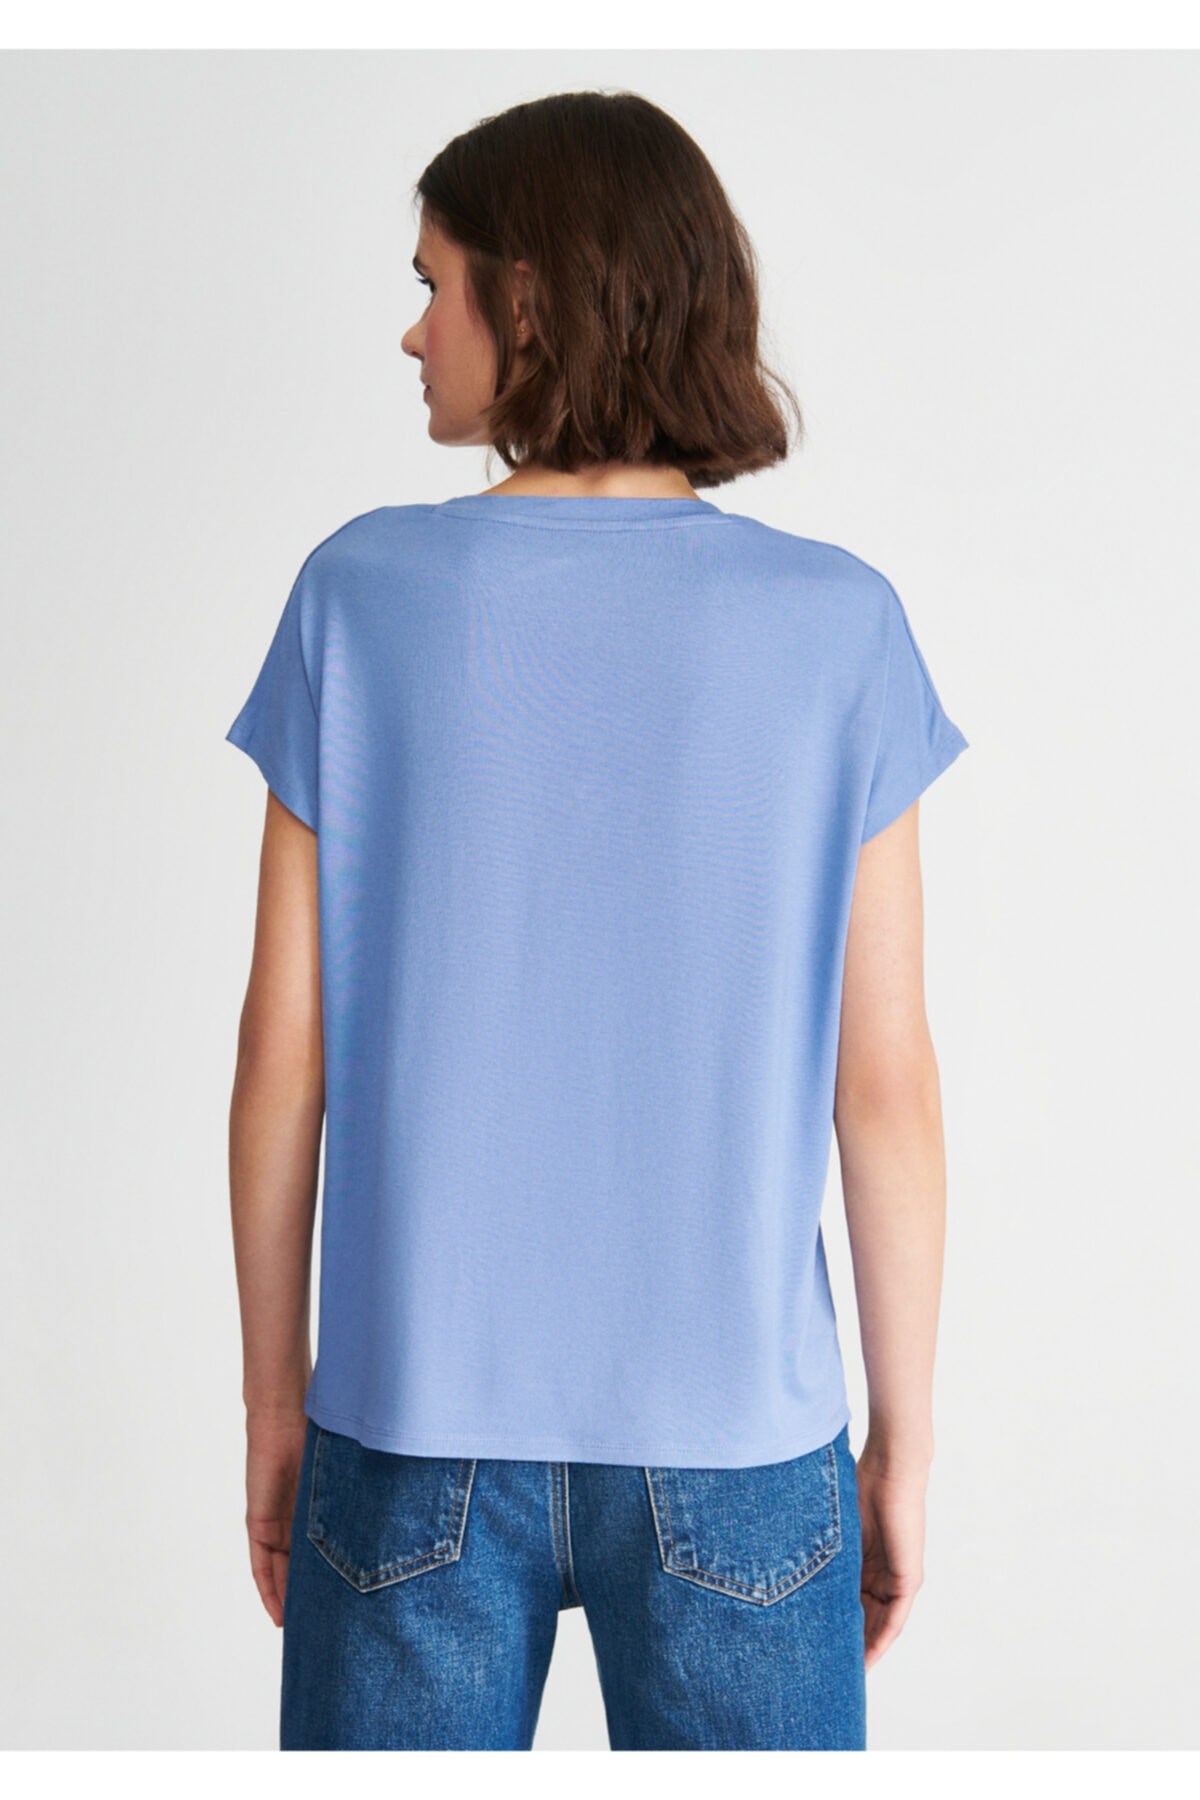 Mavi Jeans Kadın T-Shirt 167714-70854 